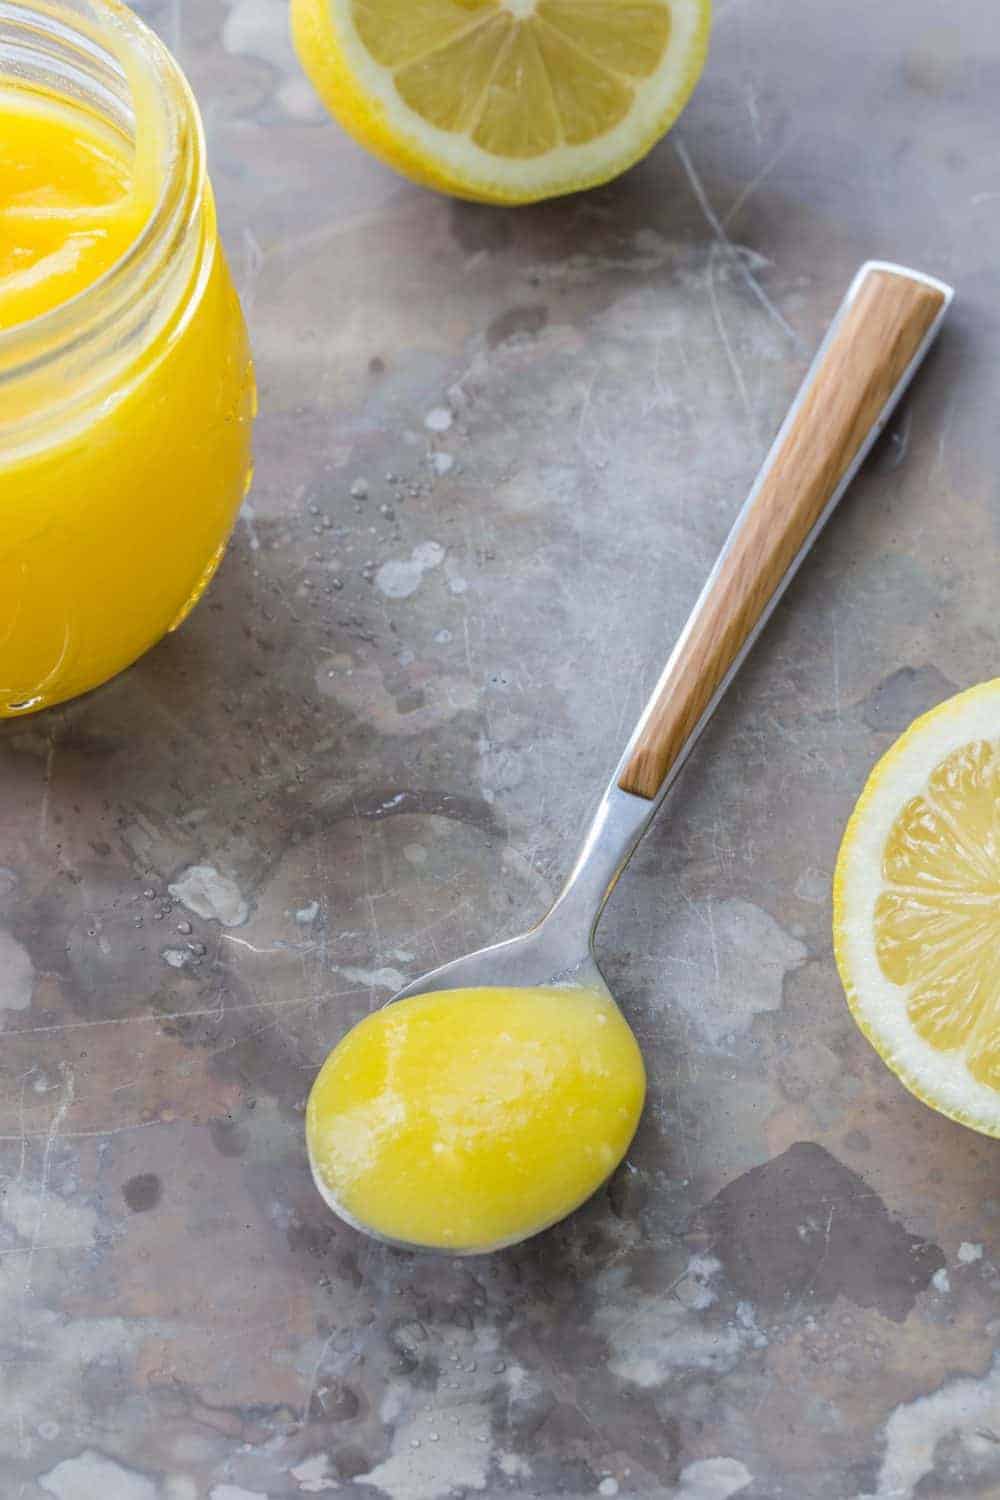 Spoon full of lemon curd next to cut lemons